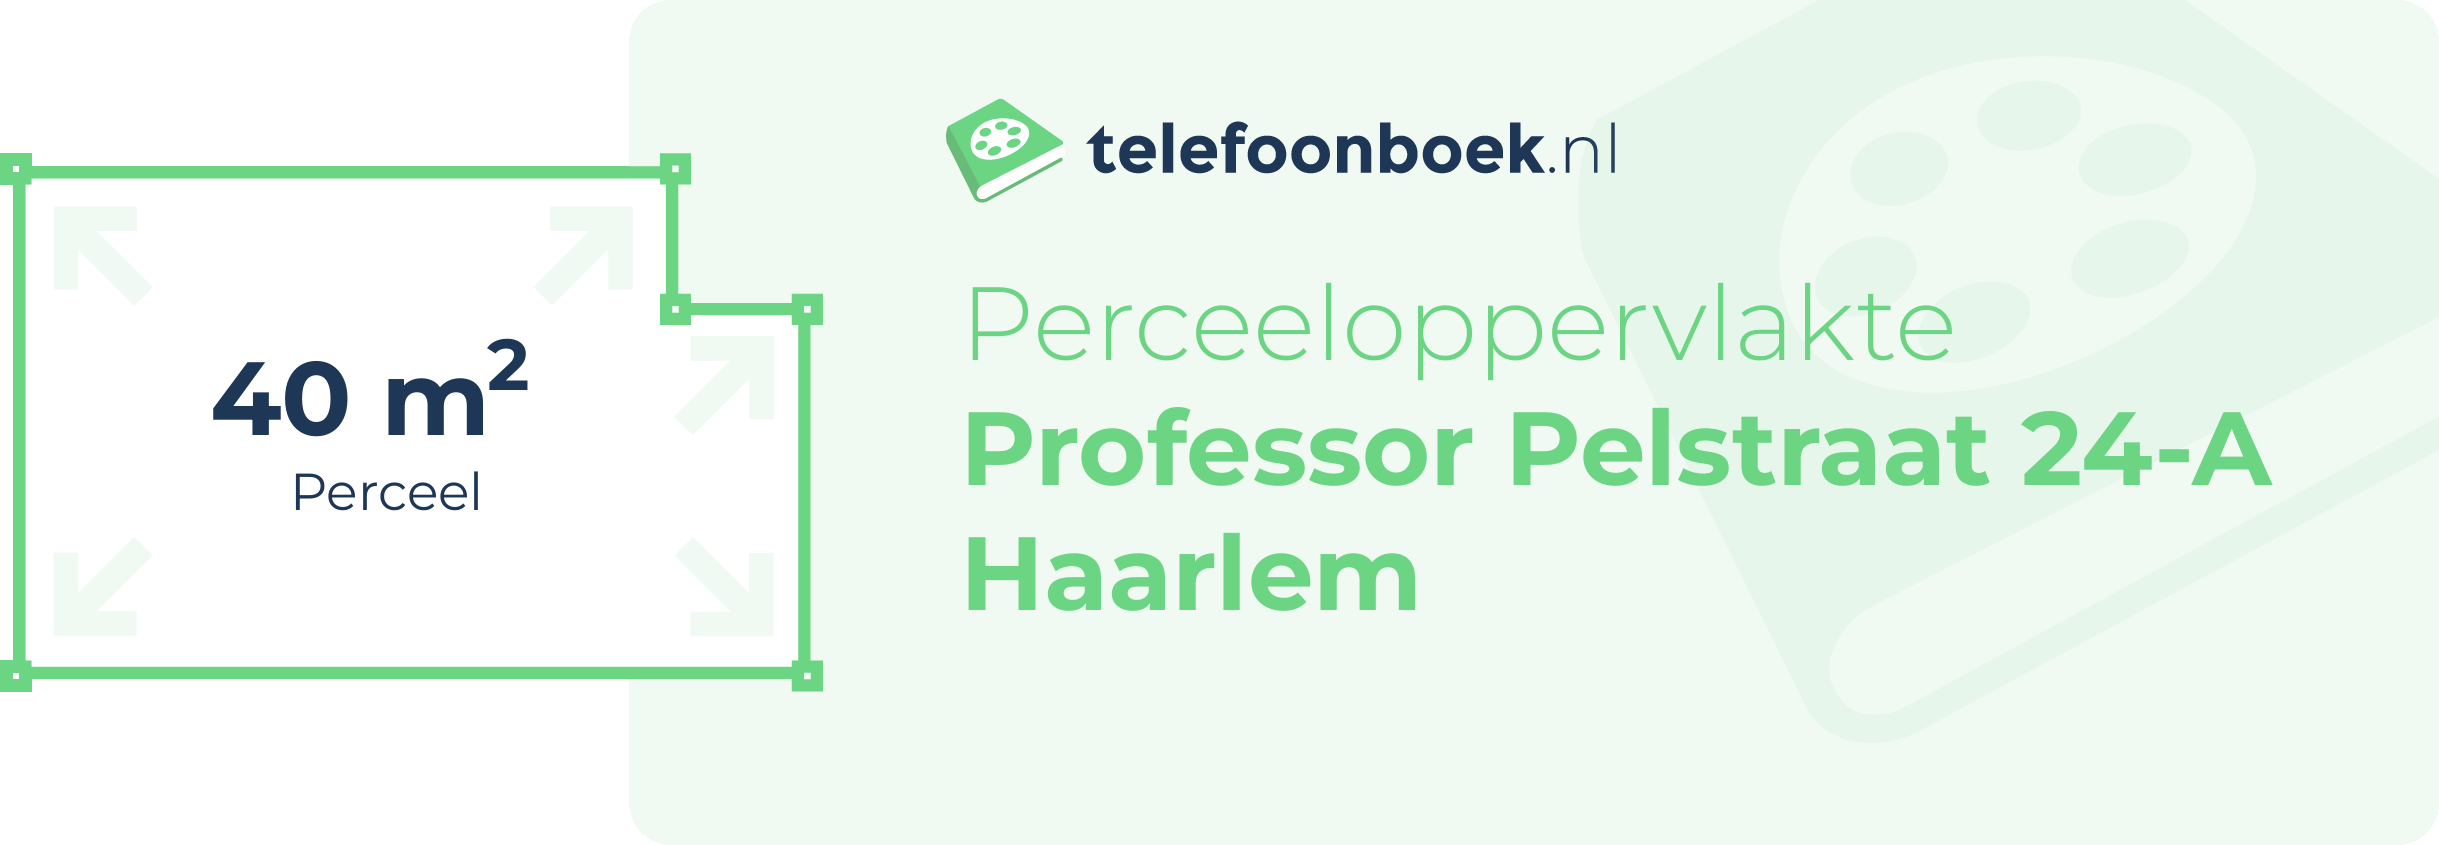 Perceeloppervlakte Professor Pelstraat 24-A Haarlem